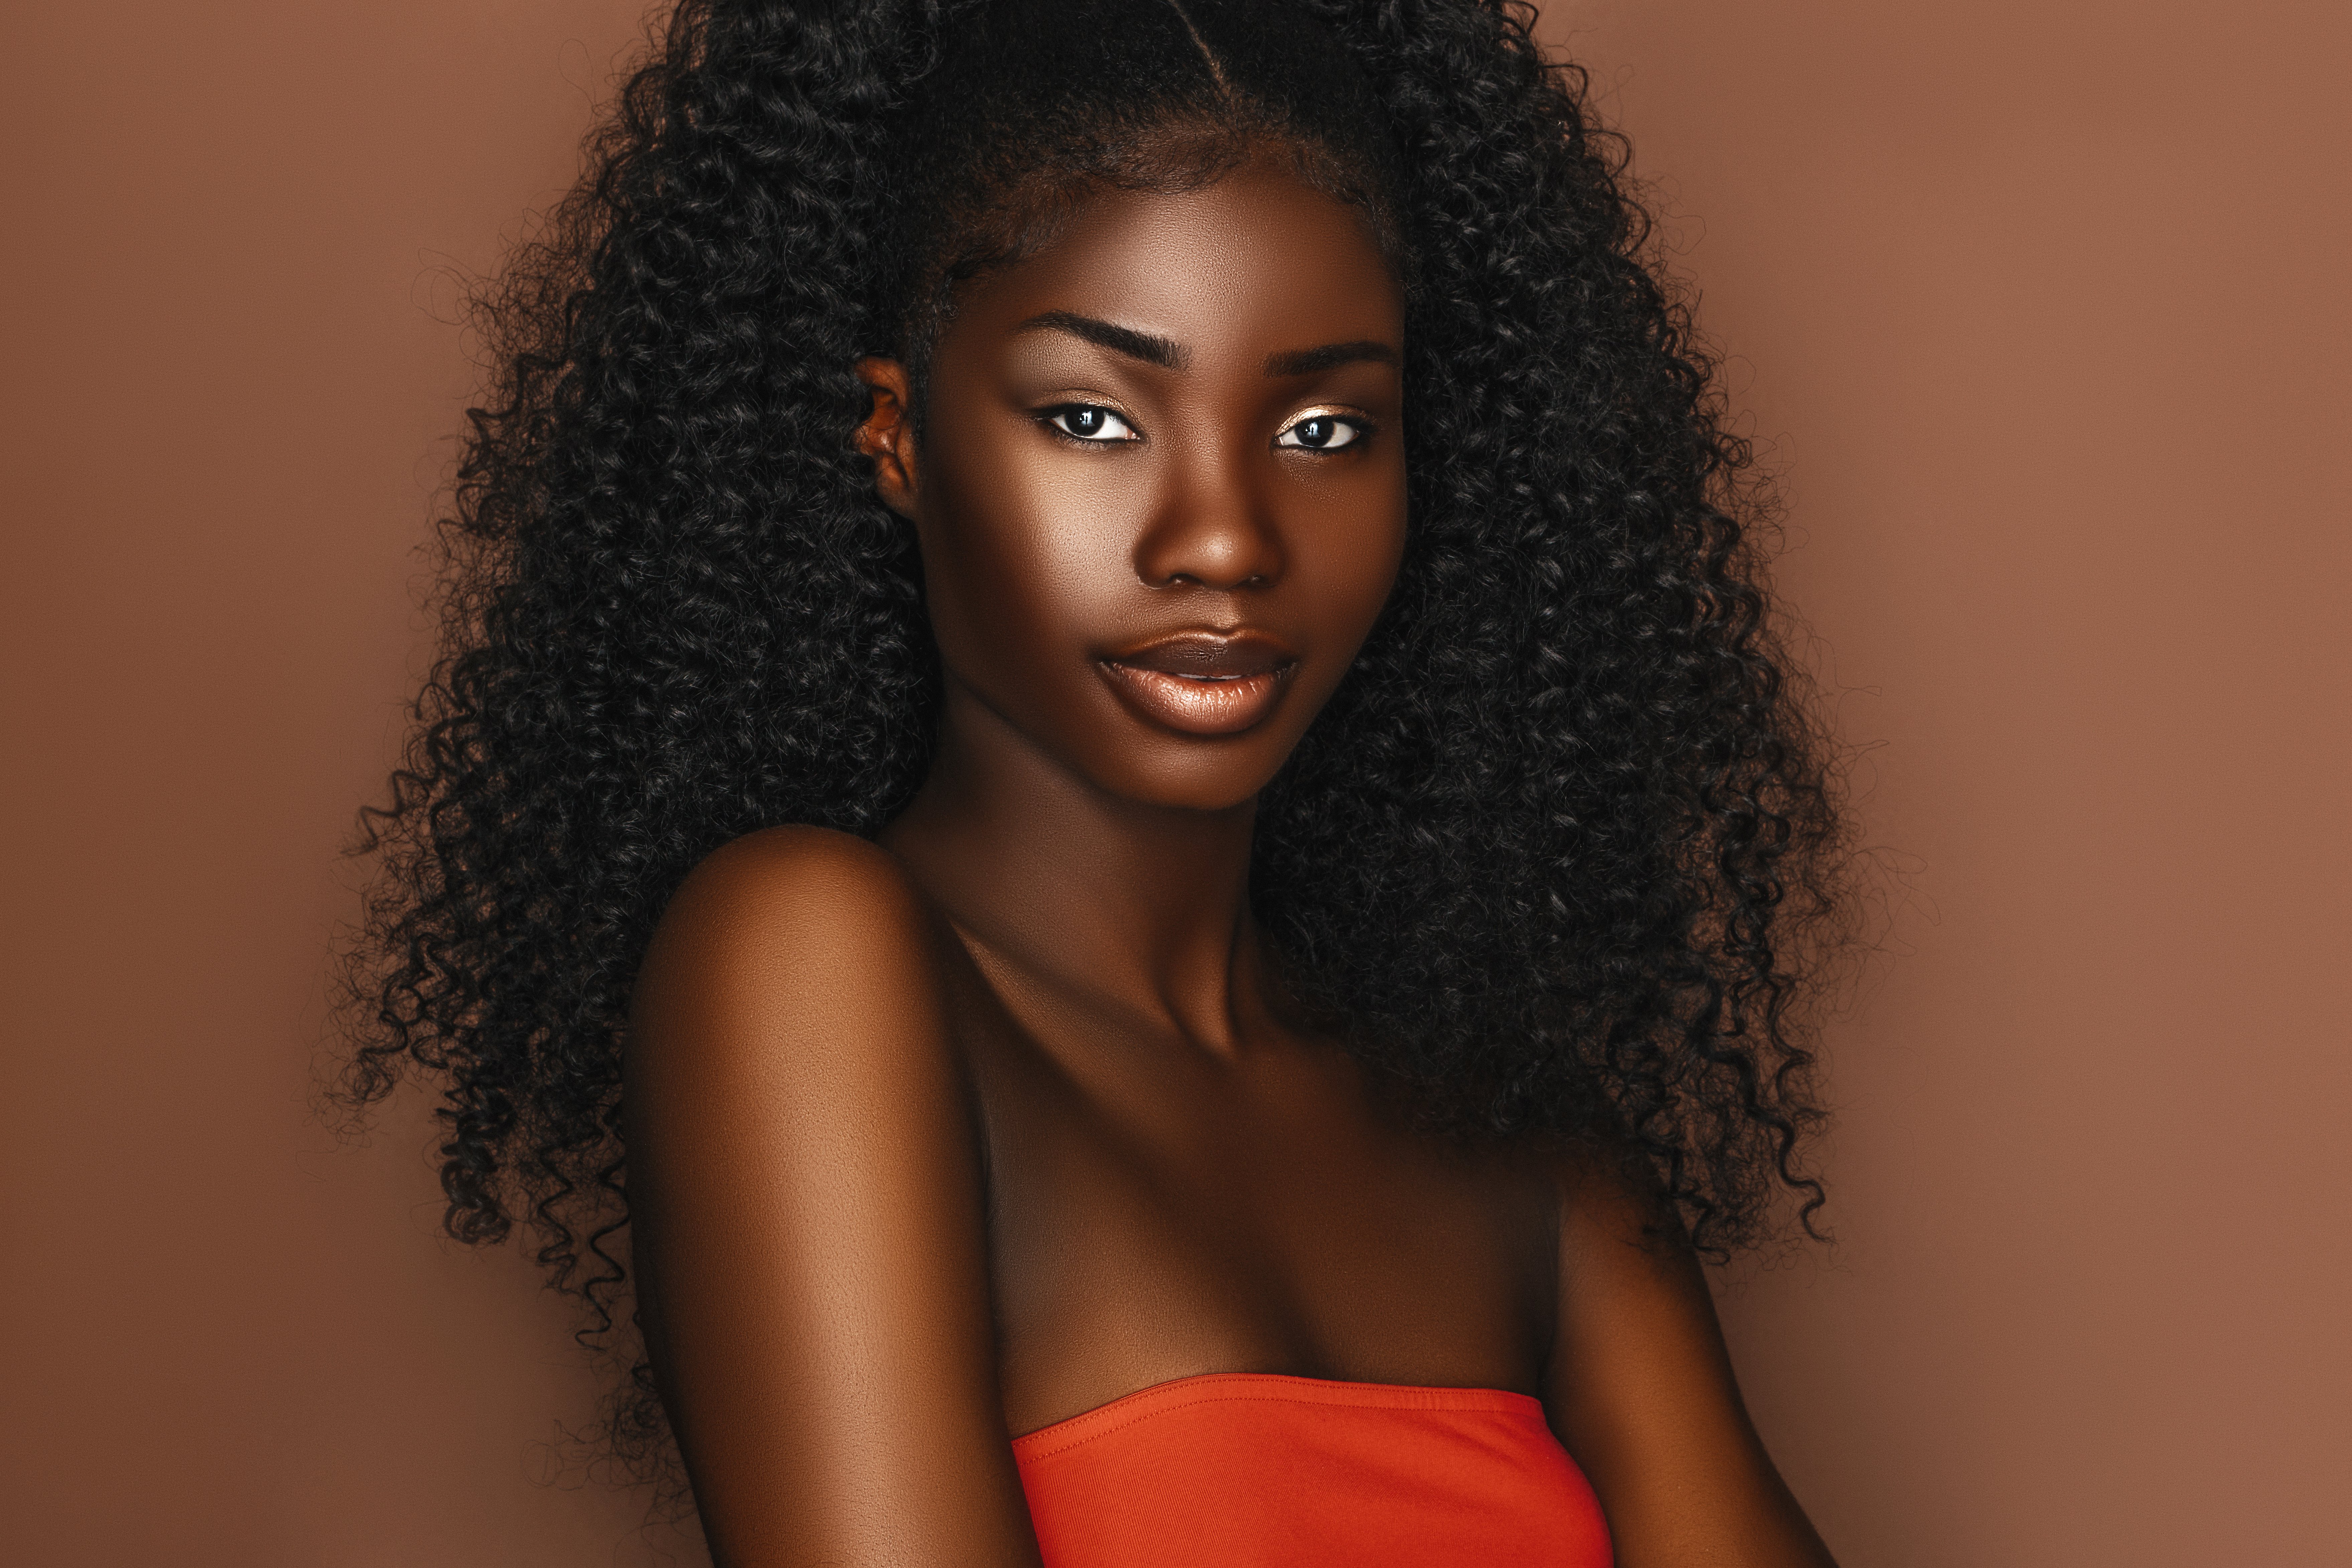 African American Woman | Shutterstock